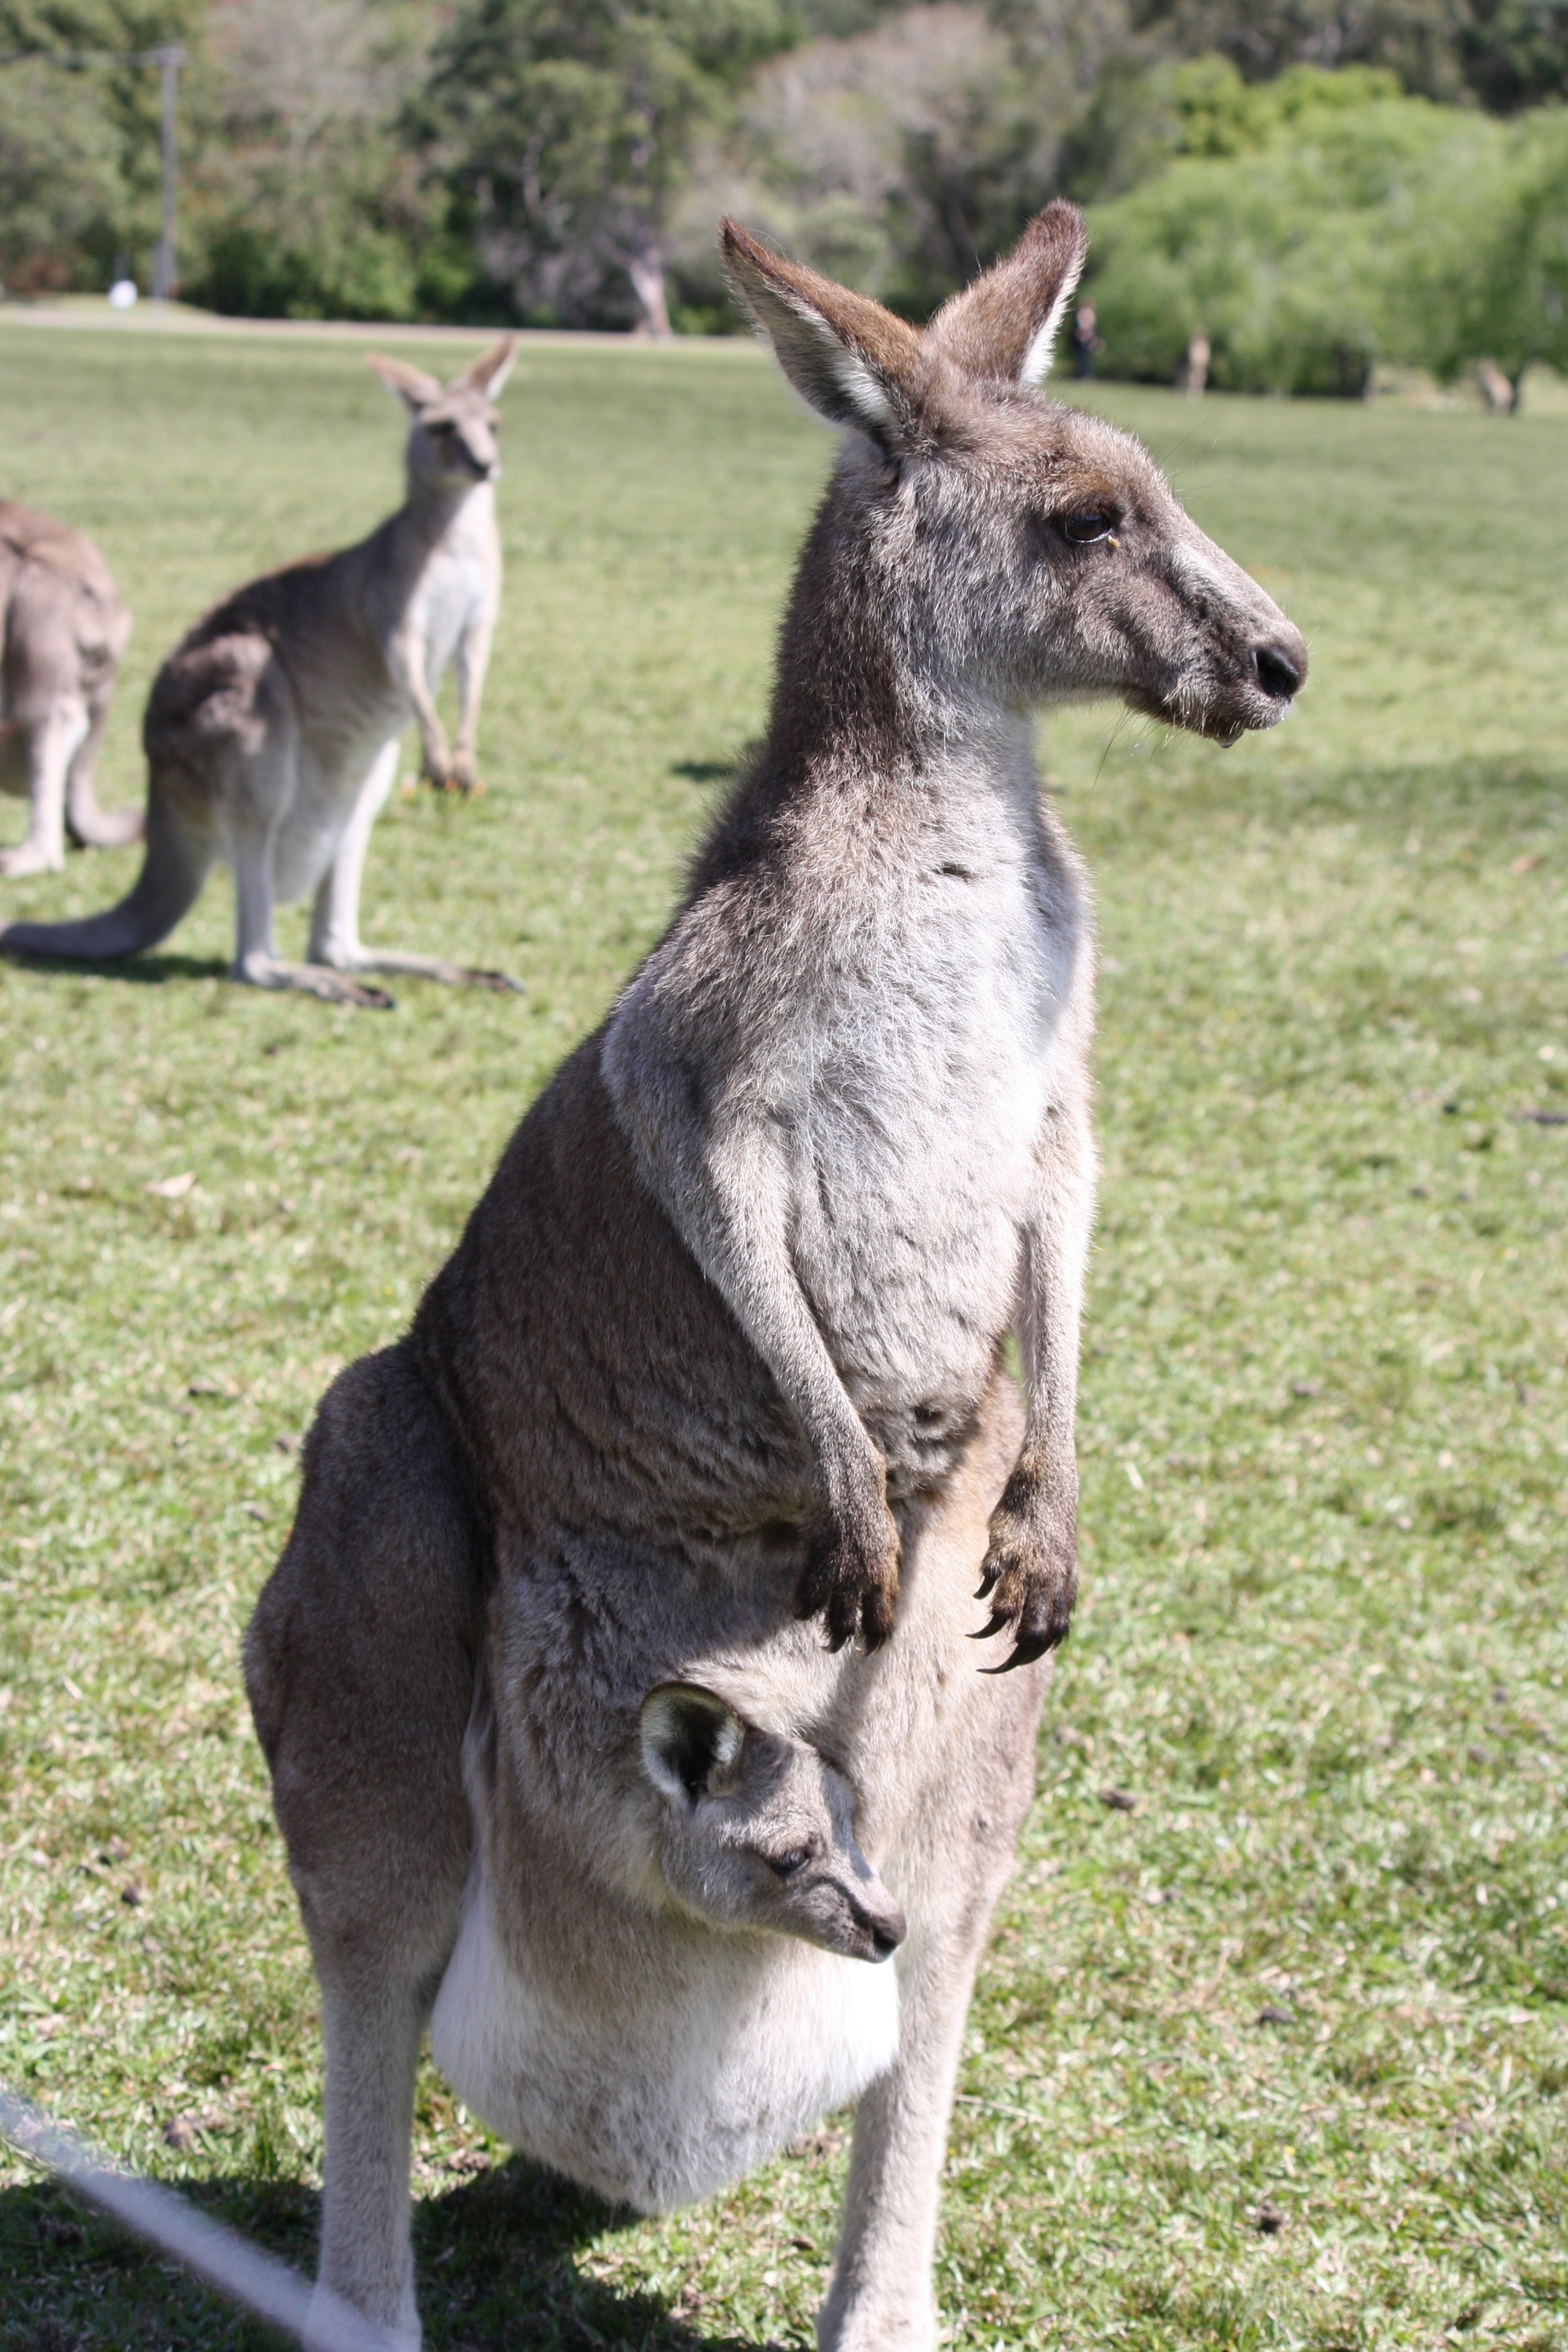 group of Kangaroo on grass field